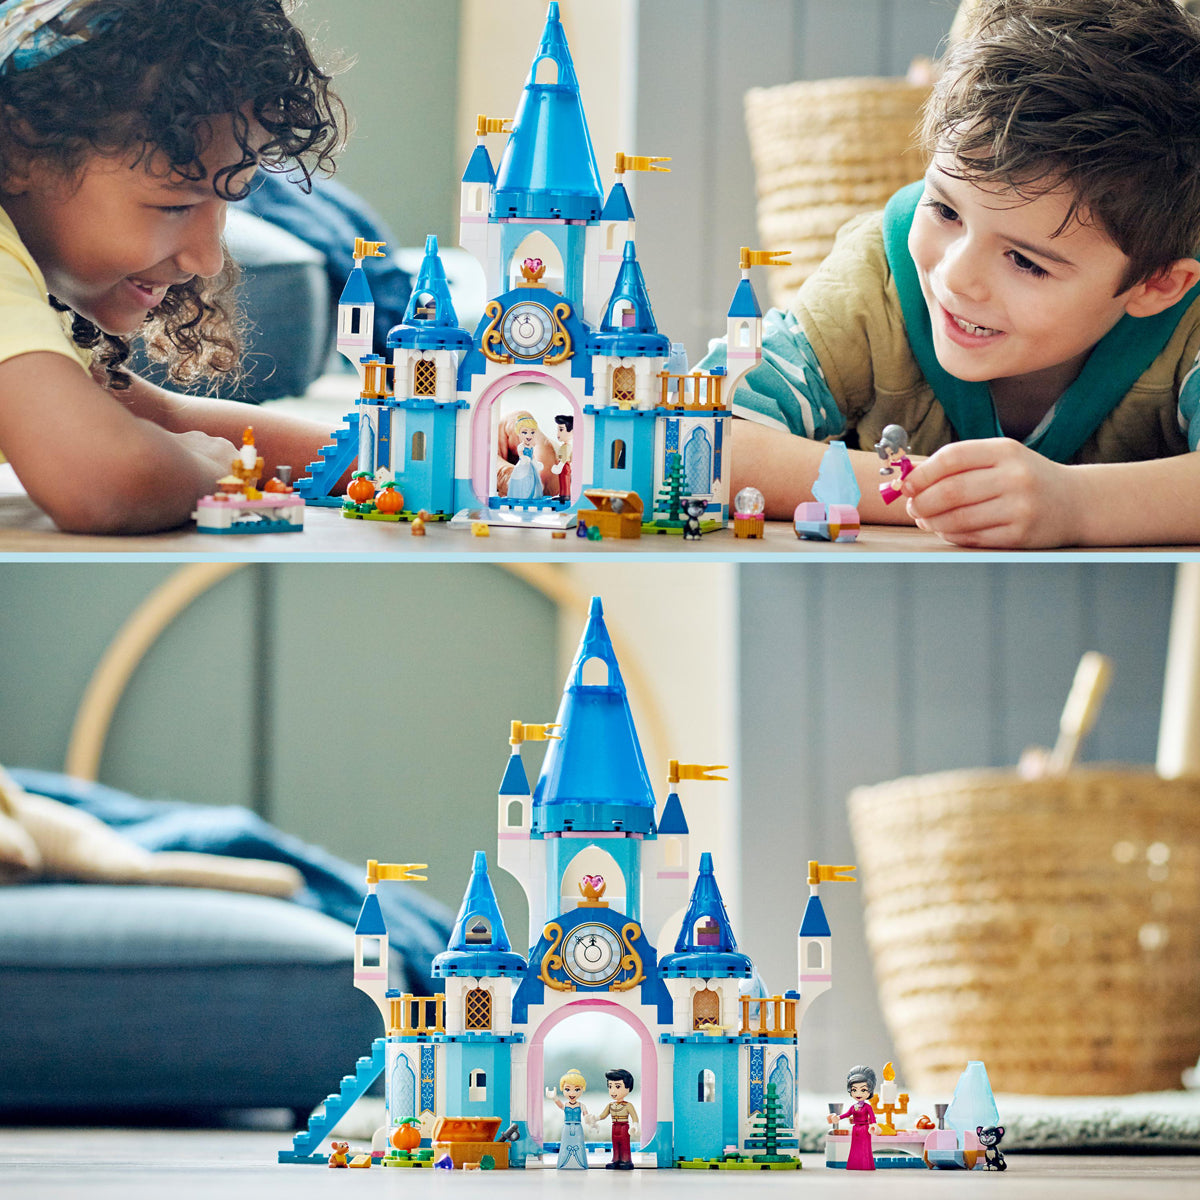 LEGO Disney Princess - Cinderella and Prince Charming's Castle 43206